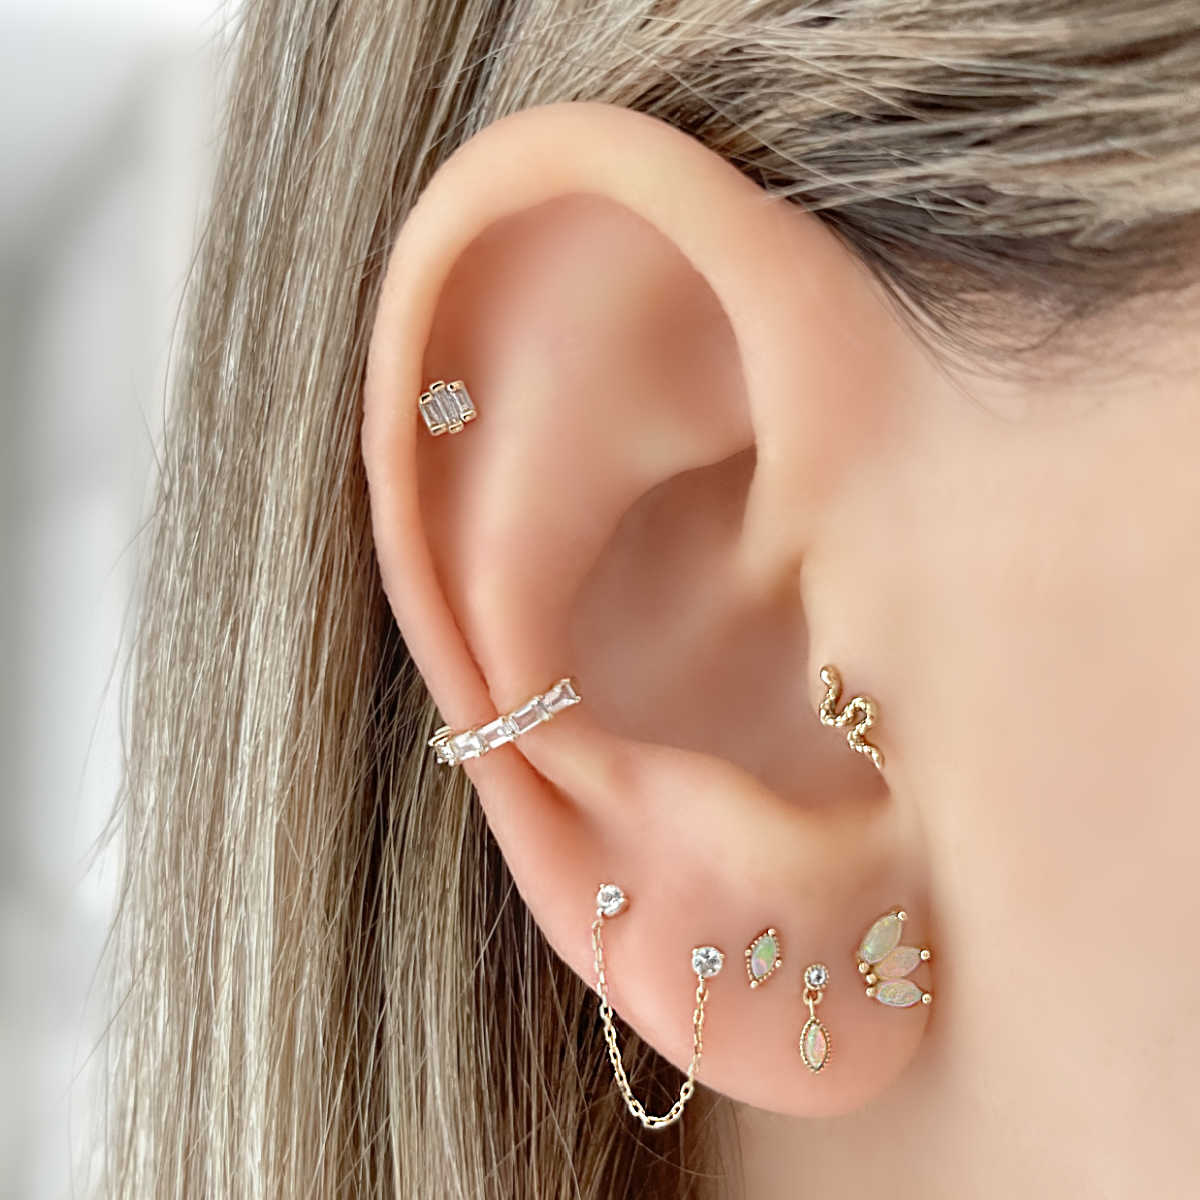 Second Piercing Earrings, Cartilage Earrings, Tiny Stud Earrings – tagged 